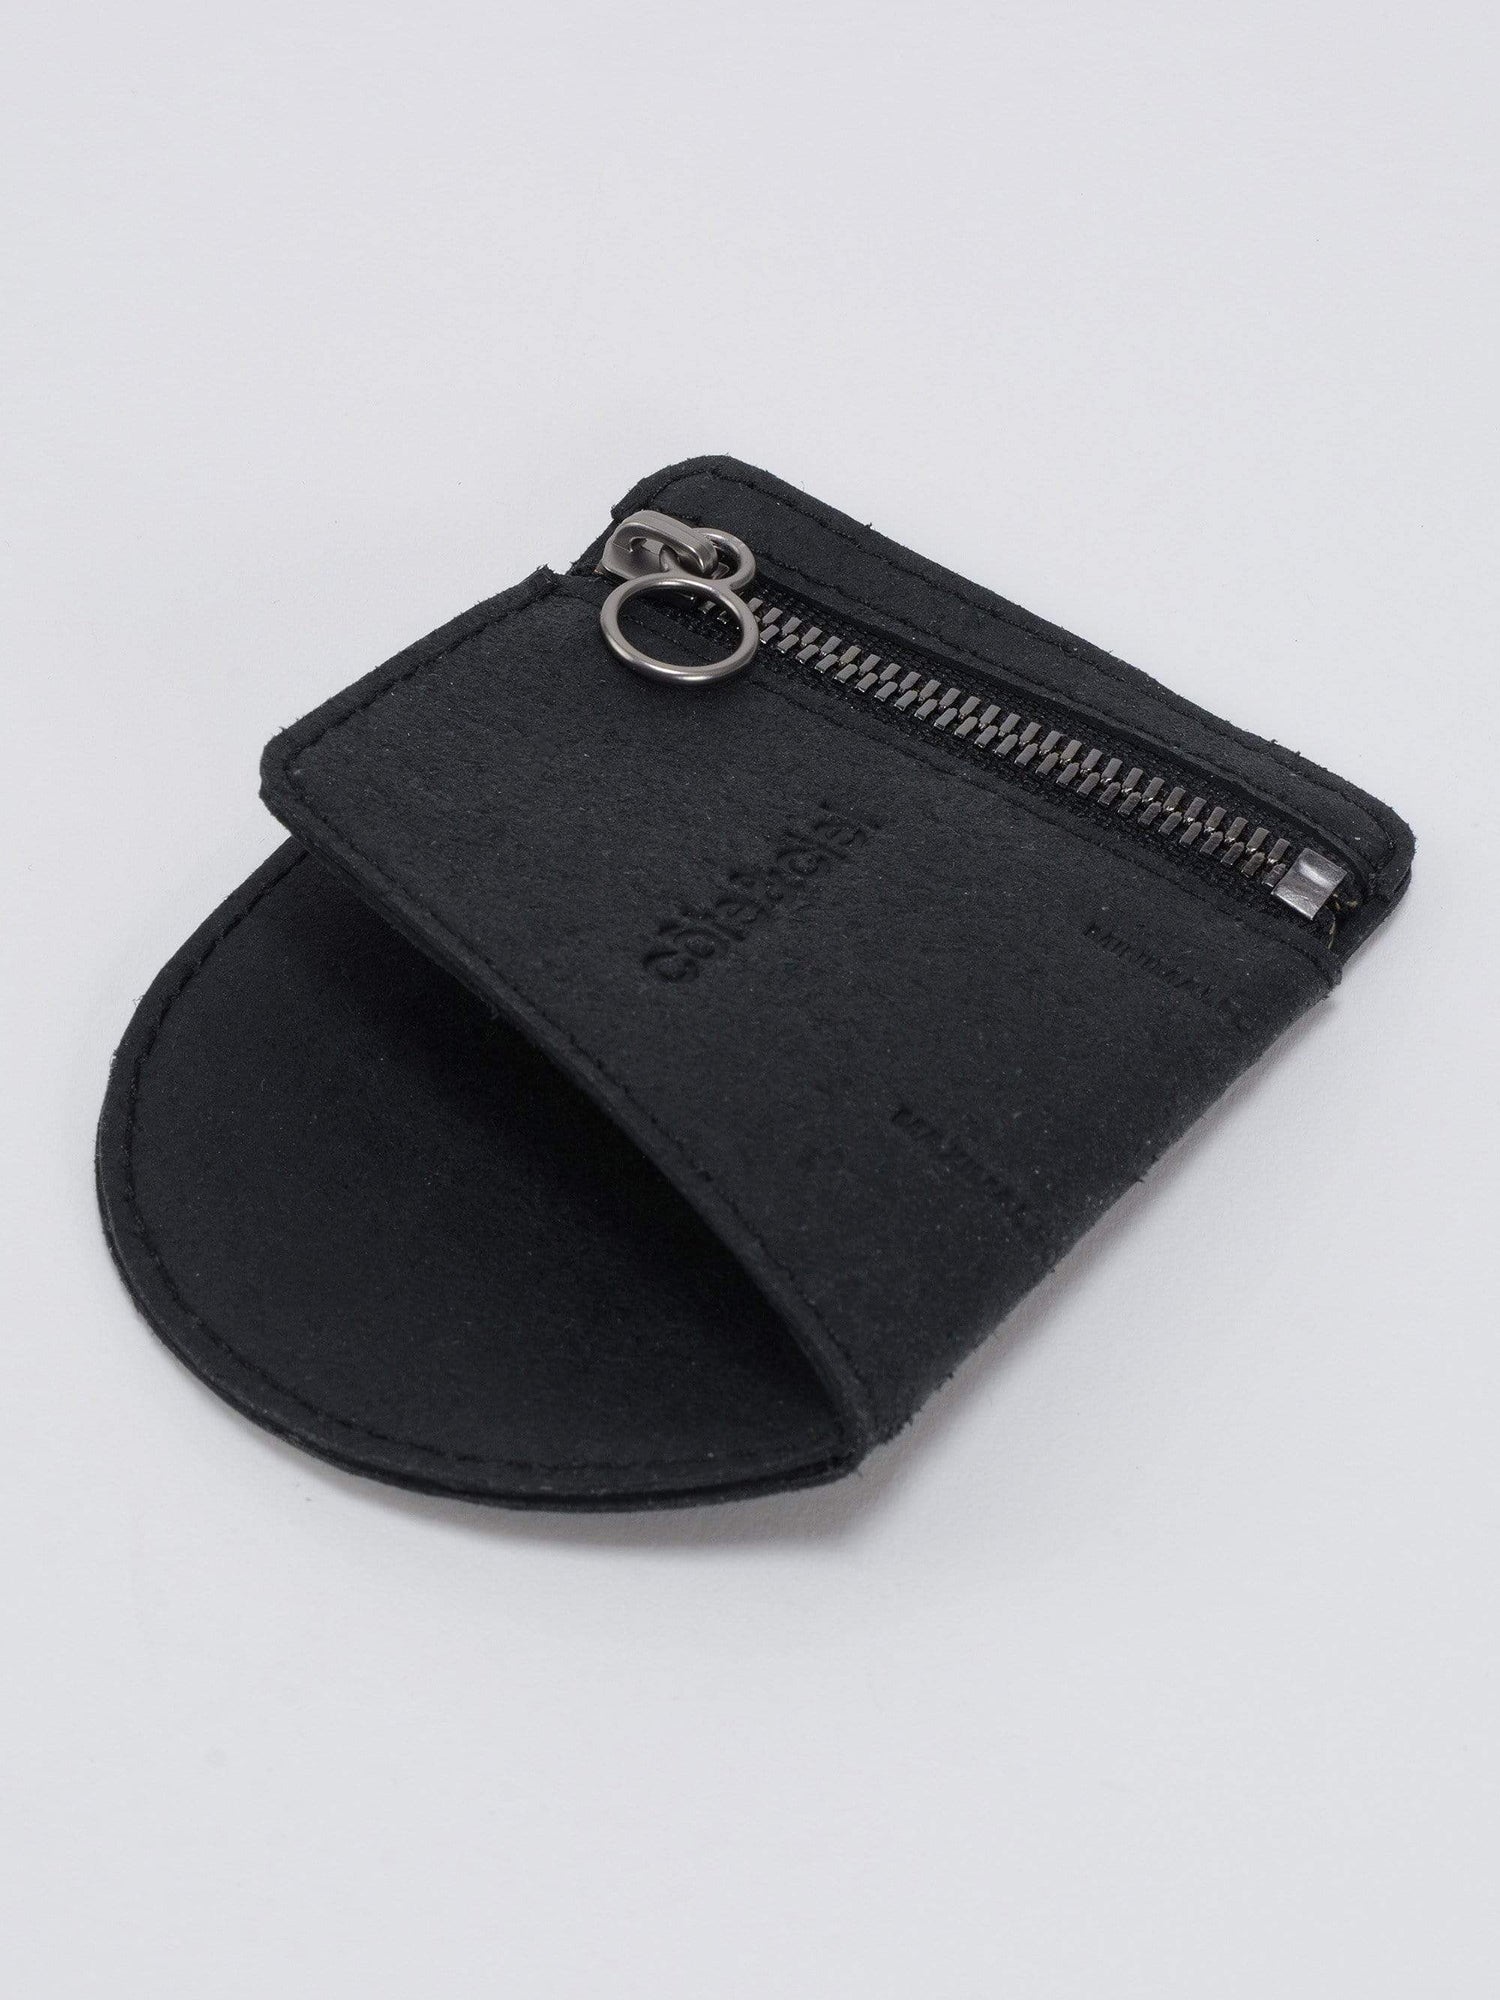 Zipper Coin Purse Fabric Change Purse Key Ring Card Holder 